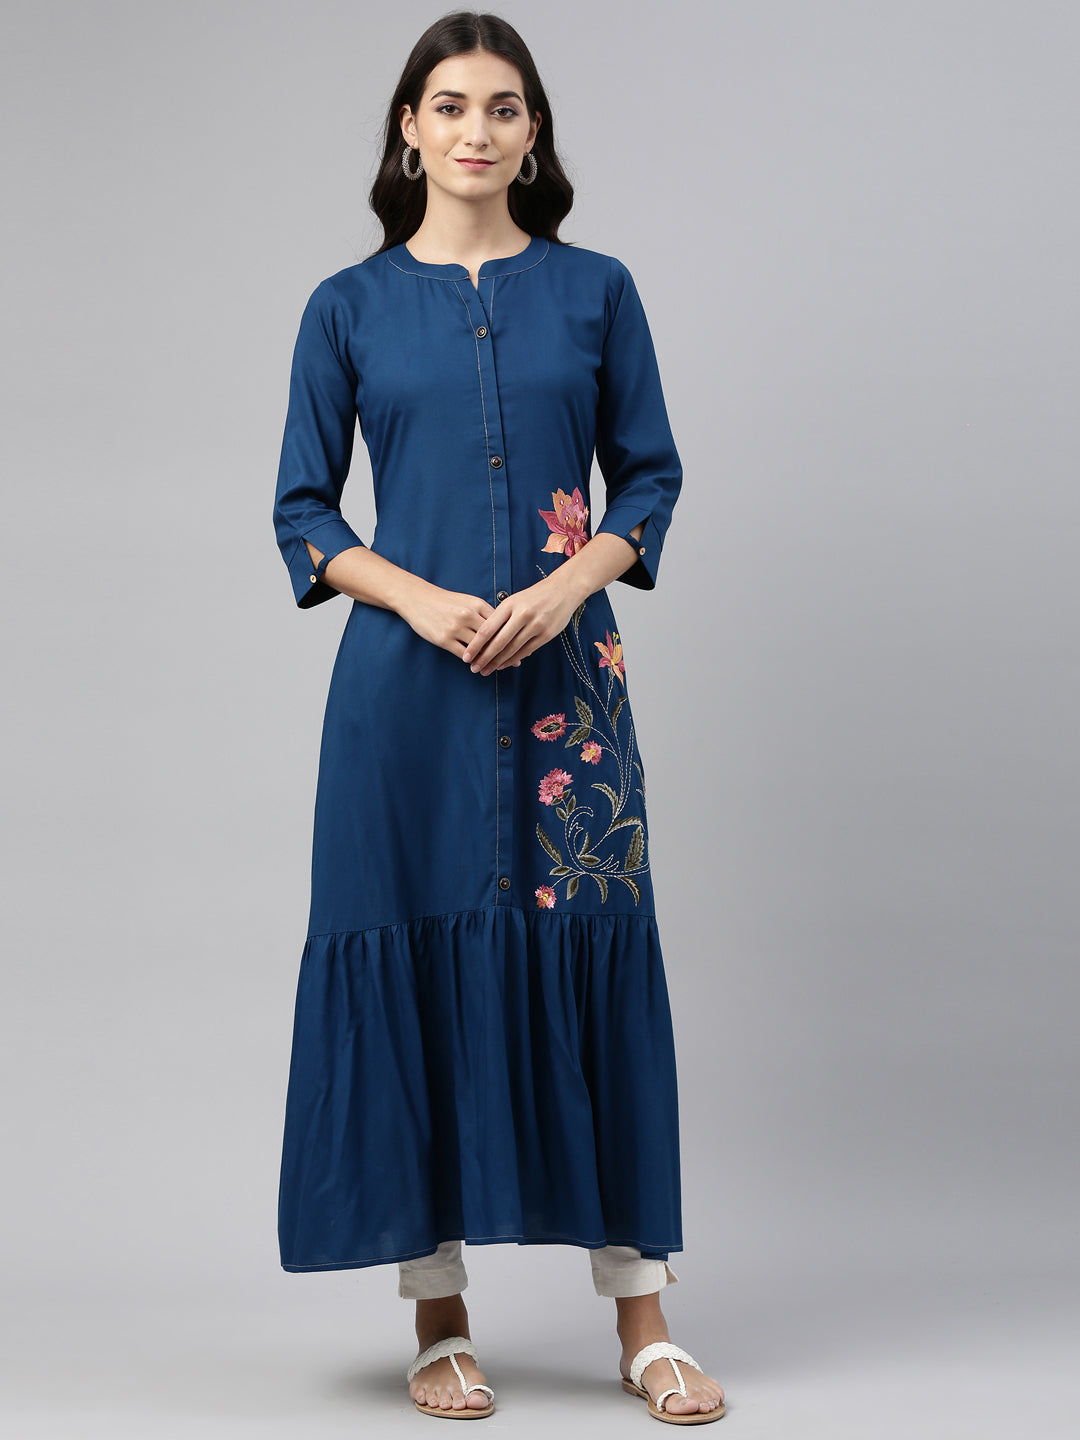 Neeru's Blue Color Rayon Fabric Tunic